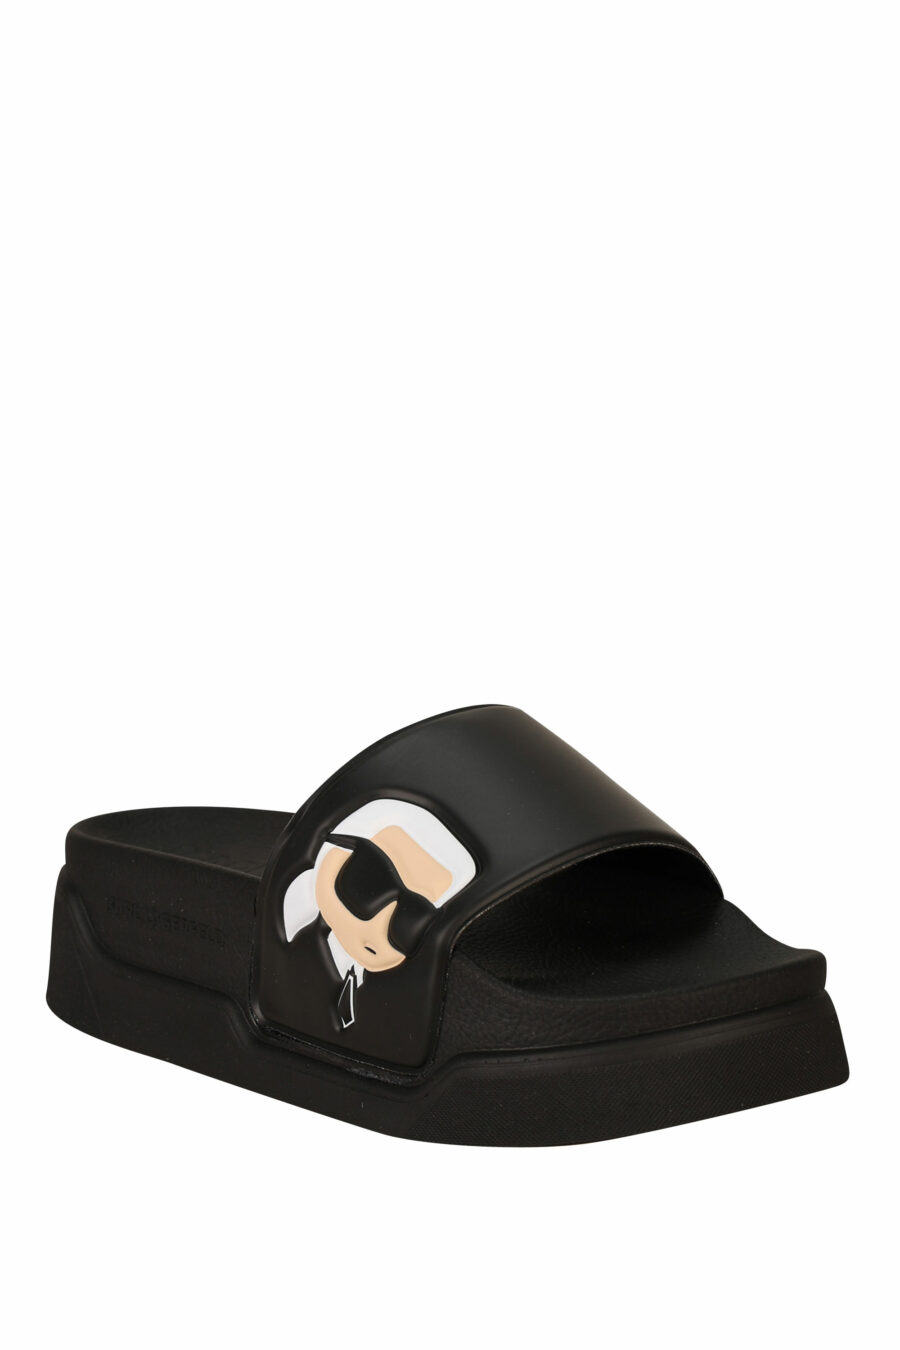 Sandales à plateforme noires avec logo "karl" - 5059529404771 1